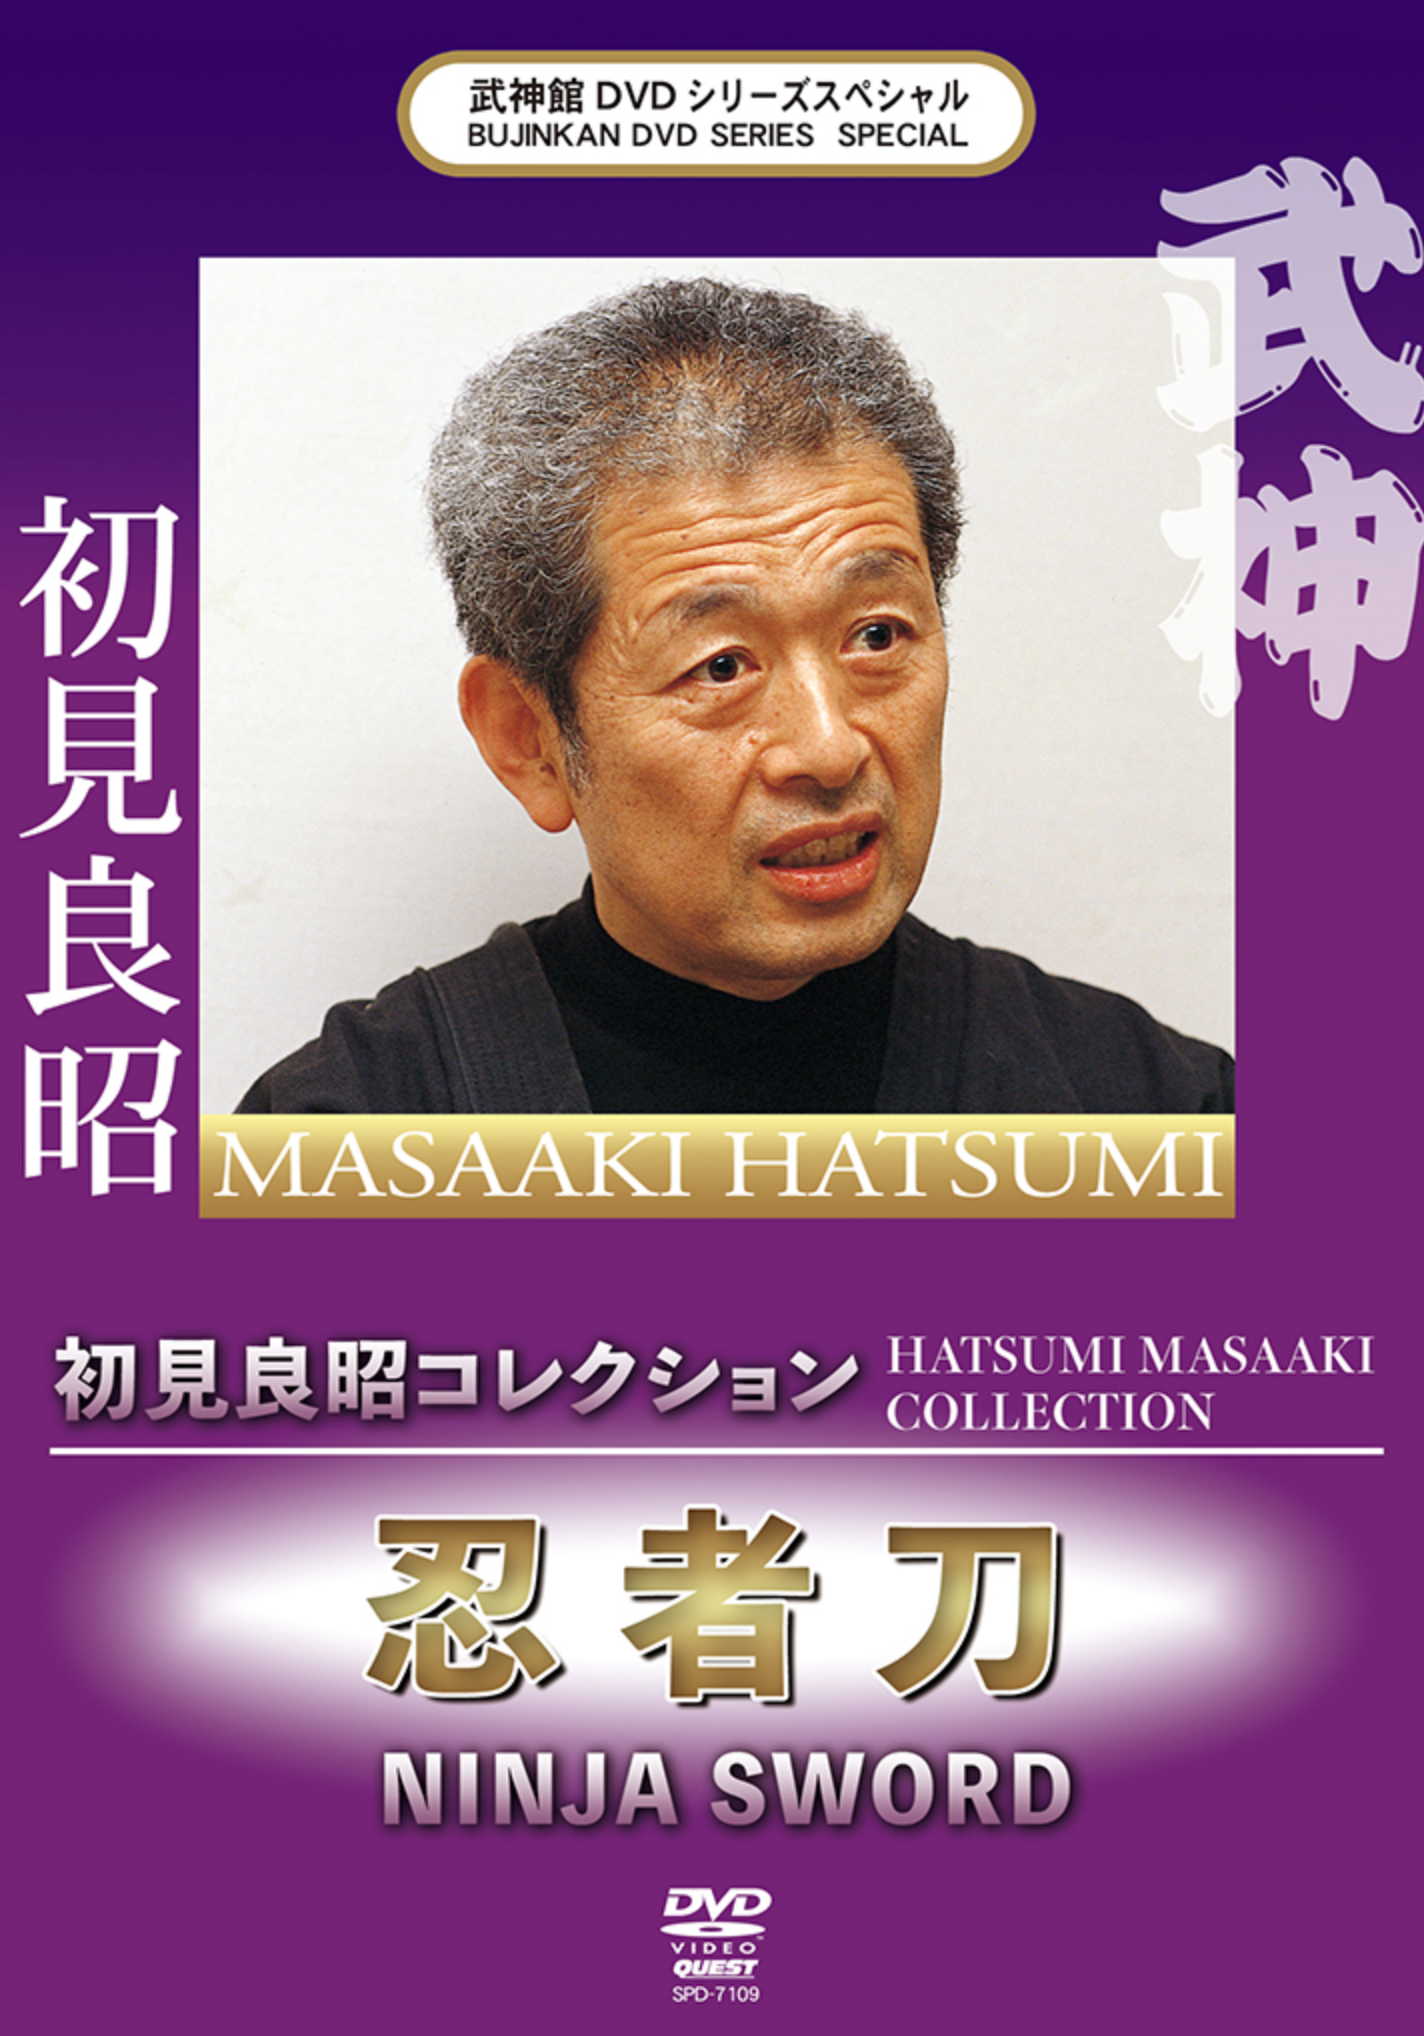 Bujinkan Series Special: Ninja Sword DVD with Masaaki Hatsumi - Budovideos Inc